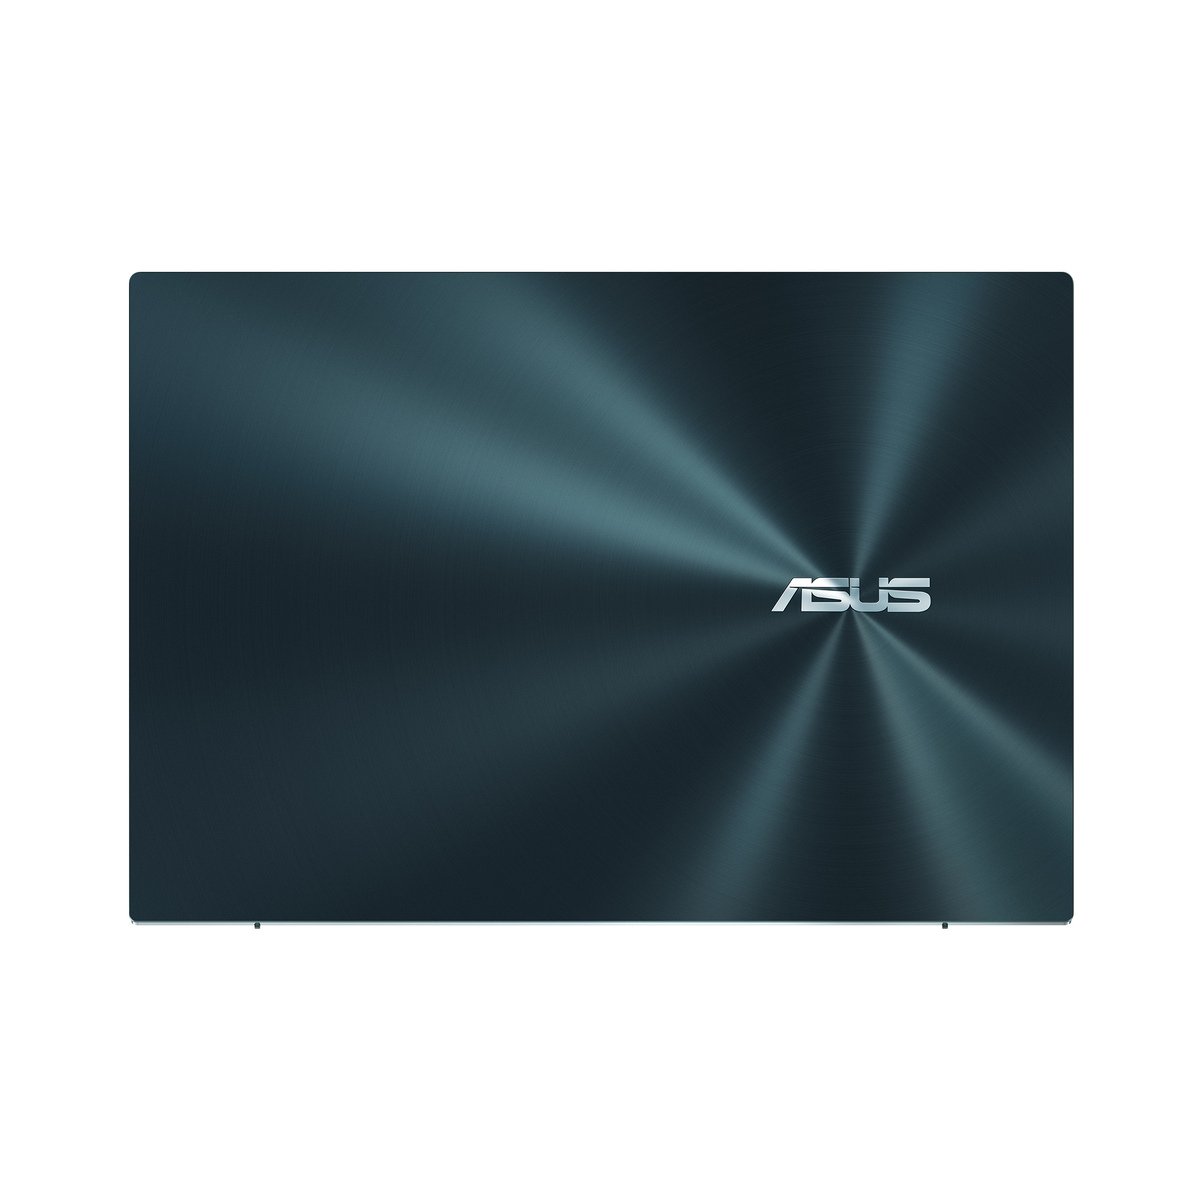 Asus ZenBook UX582HS-OLED009T,Intel Core i9,32GB RAM,1TB SSD,8GB VRAM,15.6" 4K Touch Screen,Windows 10,English/Arabic Keyboard